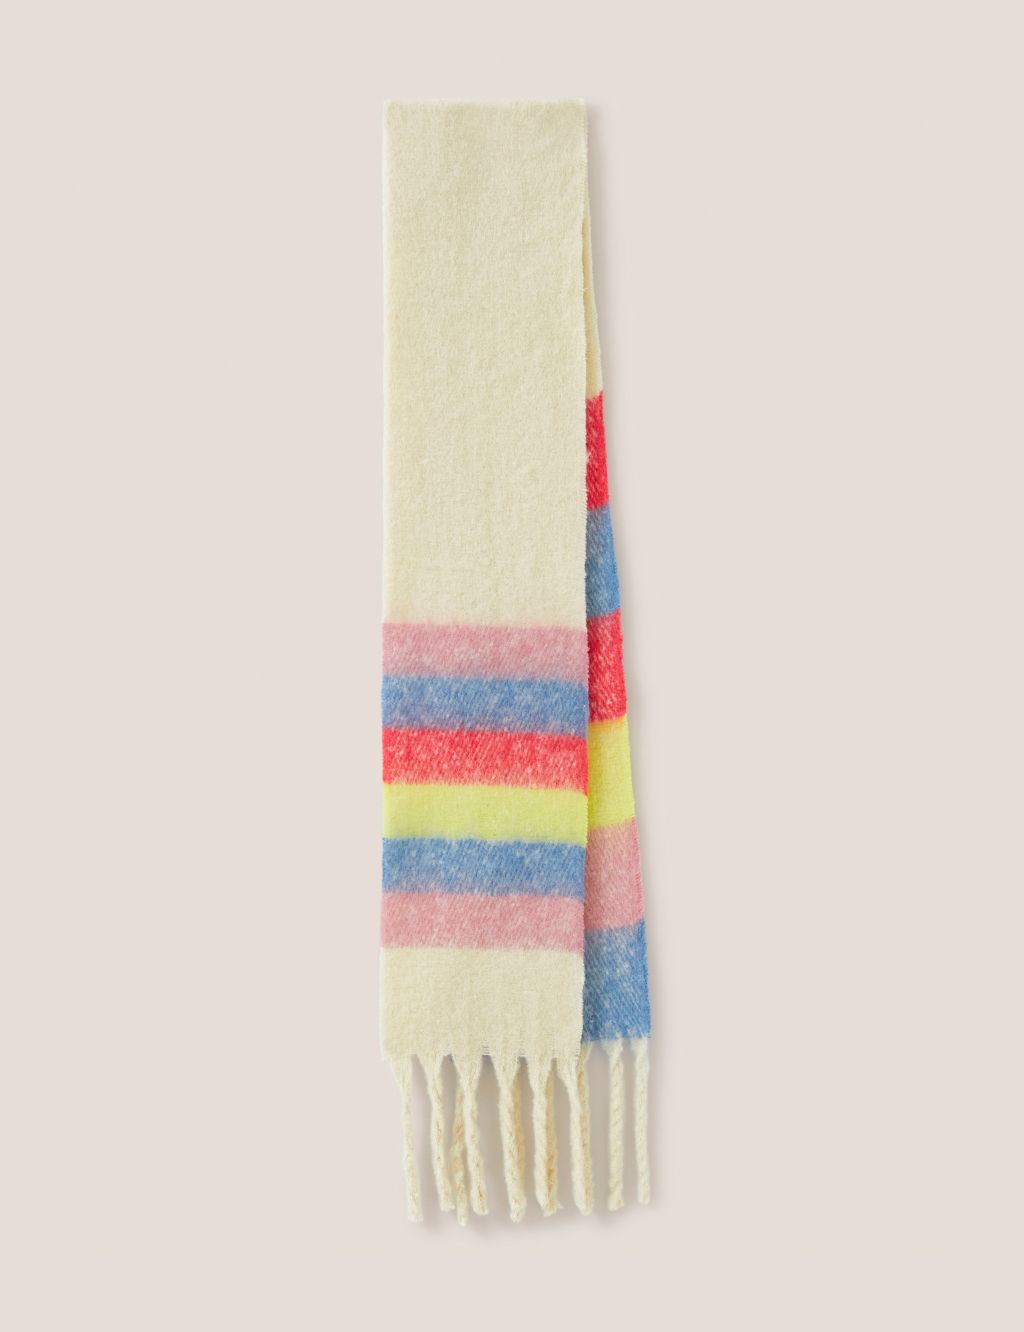 Brushed Striped Skinny Tassel Scarf image 1